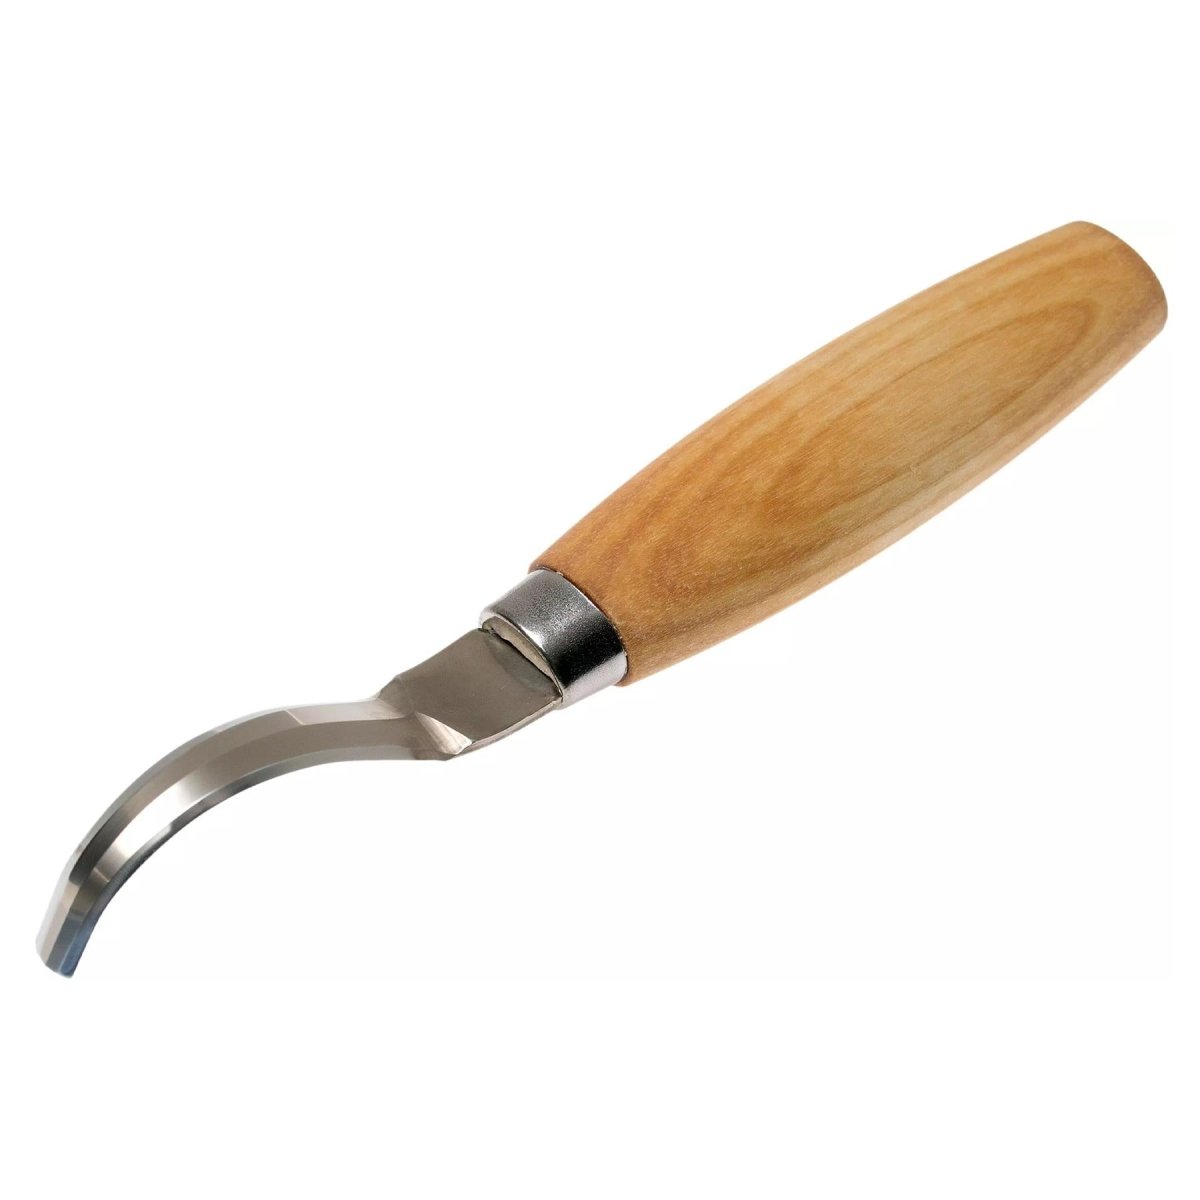 MORAKNIV hook spoon knife 163 double edge woodcarving working tool stainless